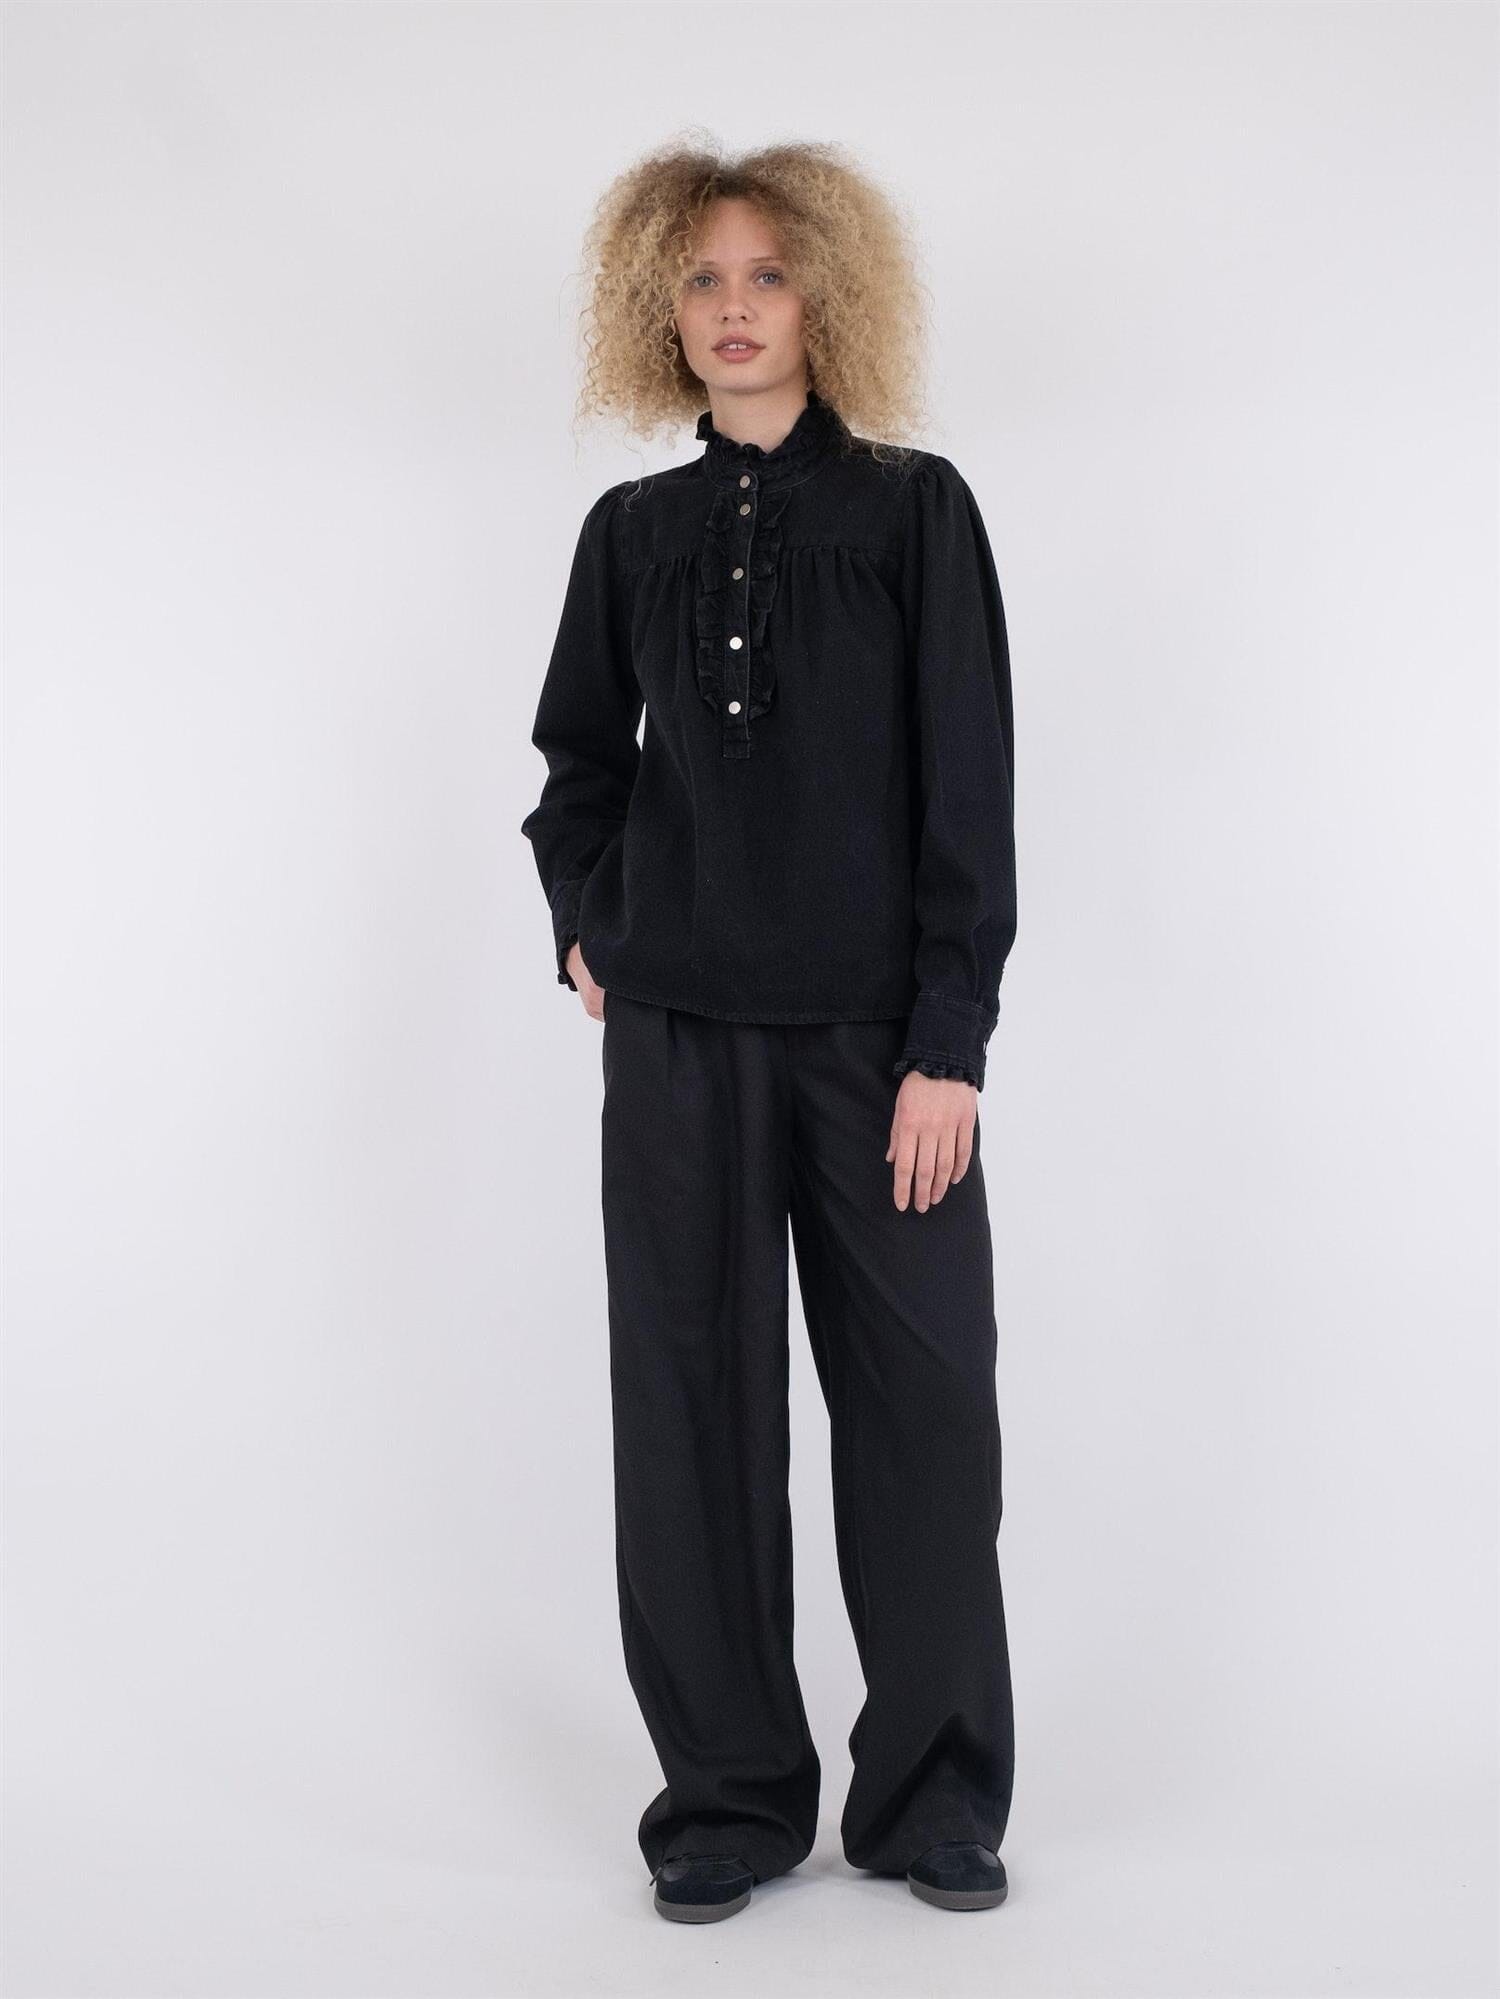 Neo Noir Justine Denim Shirt Black Skjorte